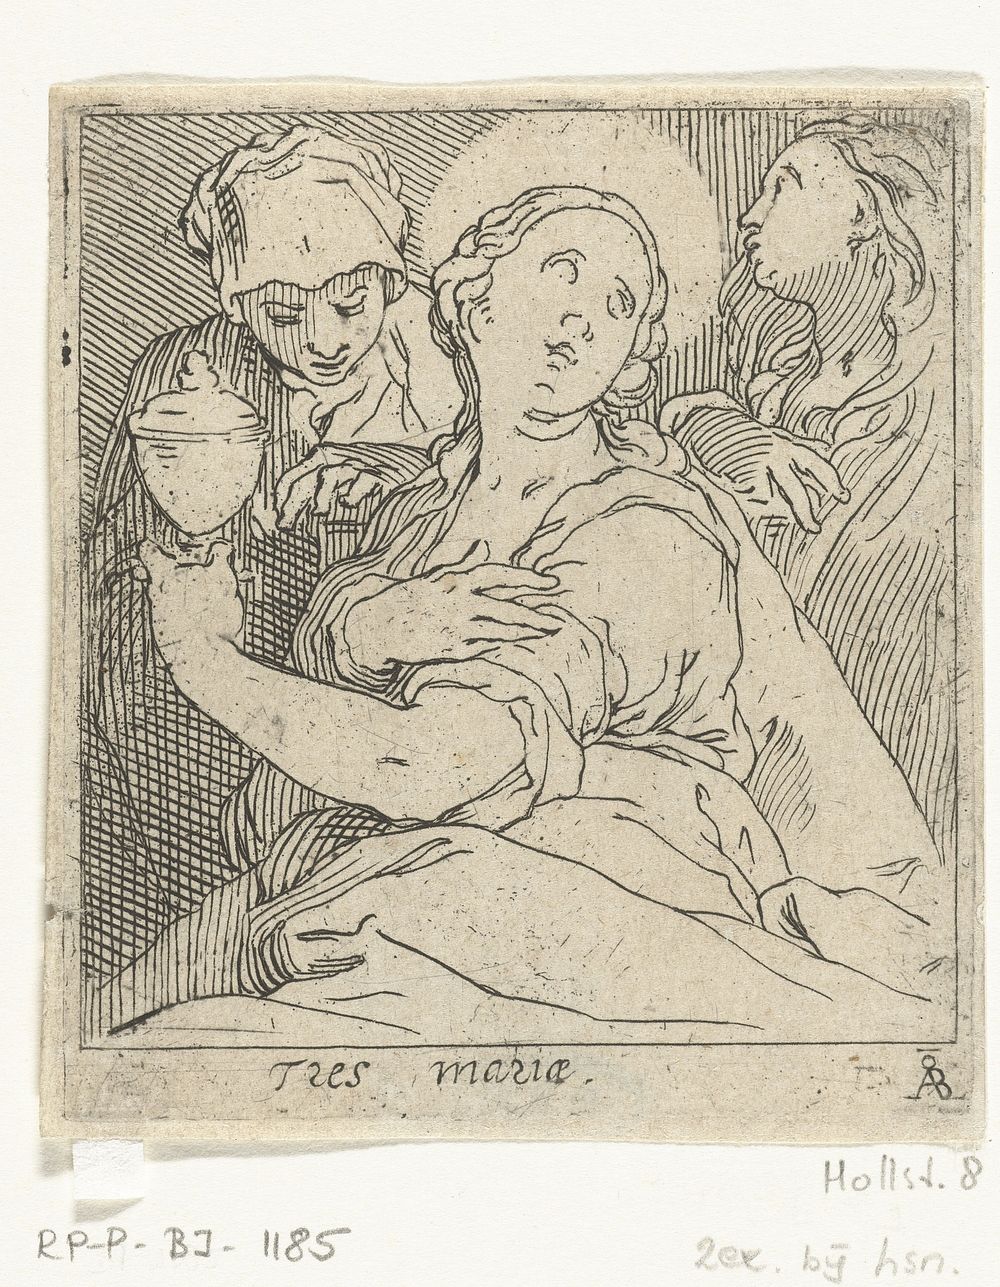 De drie Maria's (1610 - 1615) by Boëtius Adamsz Bolswert and Abraham Bloemaert